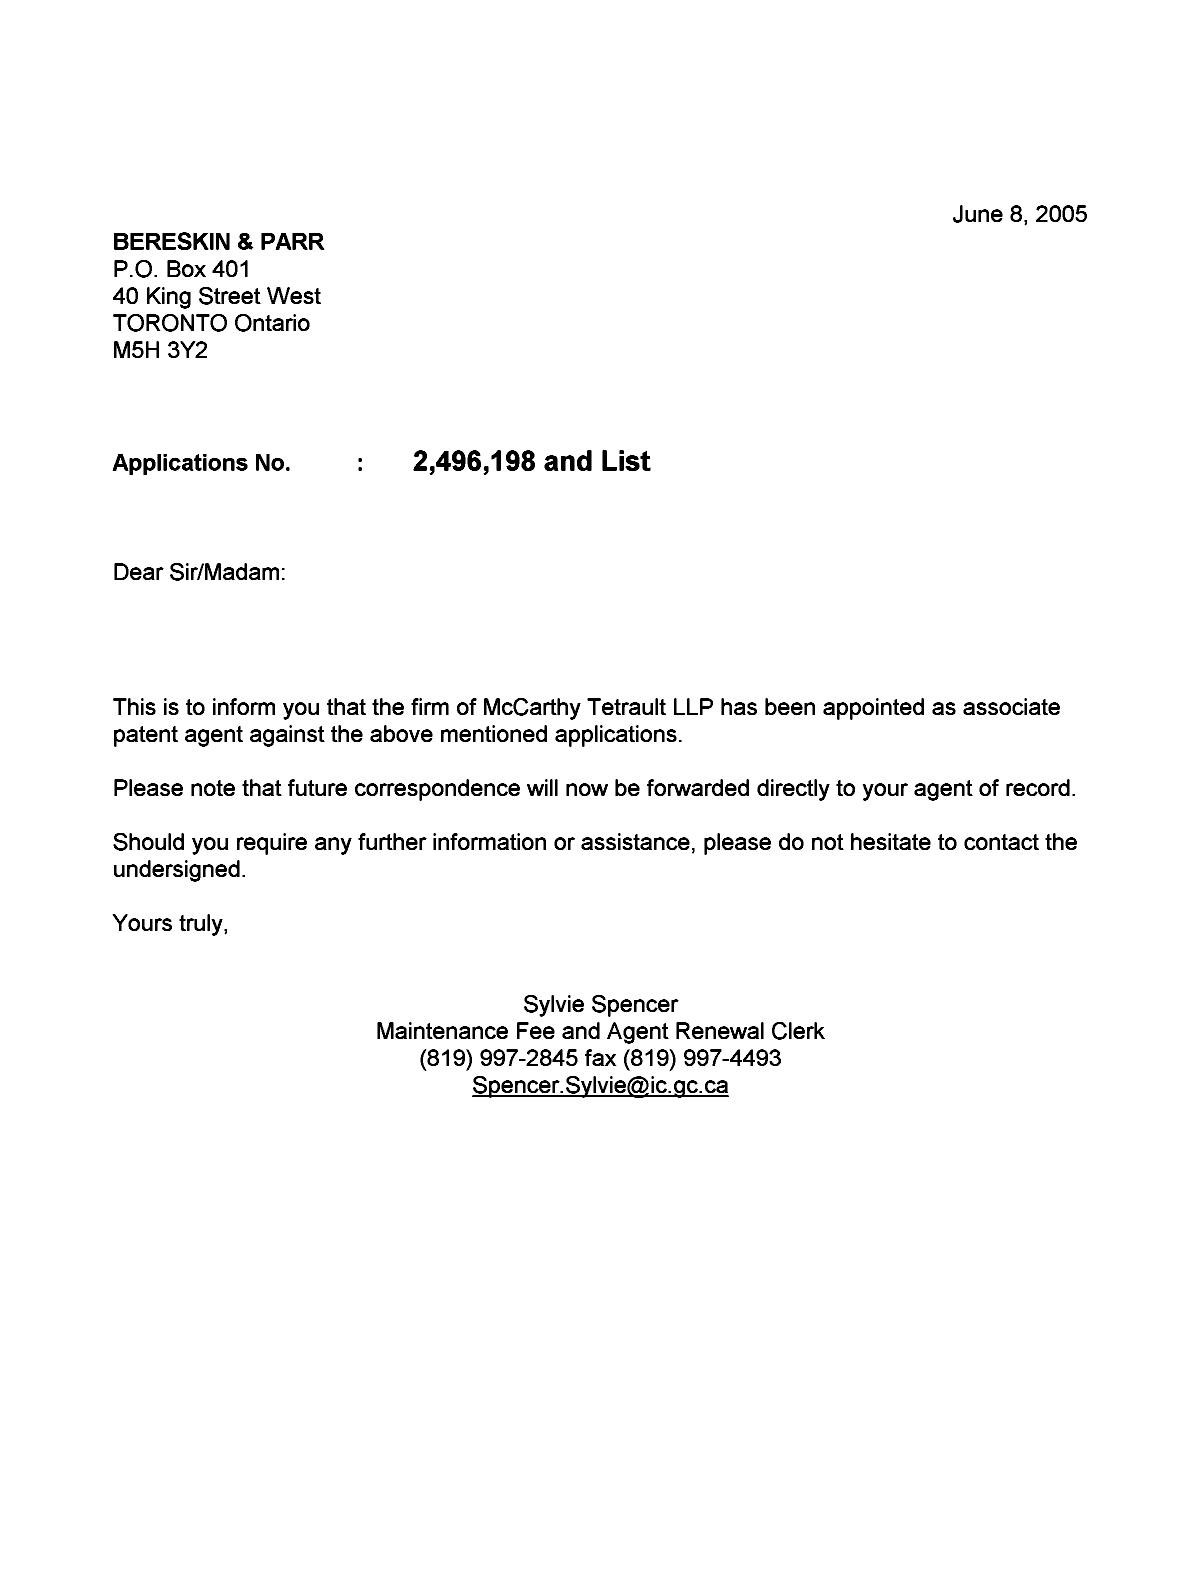 Canadian Patent Document 2372118. Correspondence 20050608. Image 1 of 1